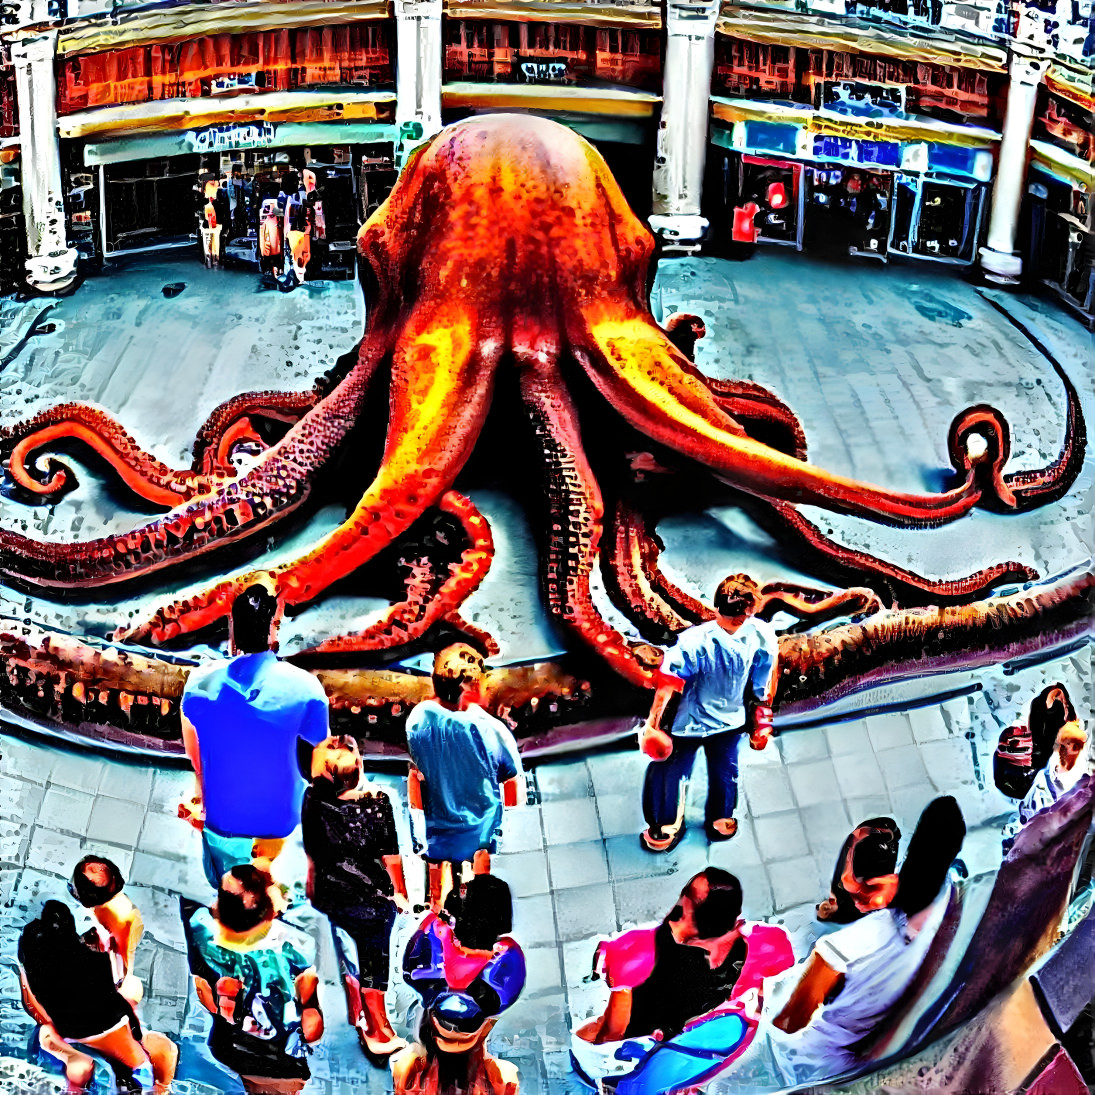 urban octopus has a meet & greet at the mall